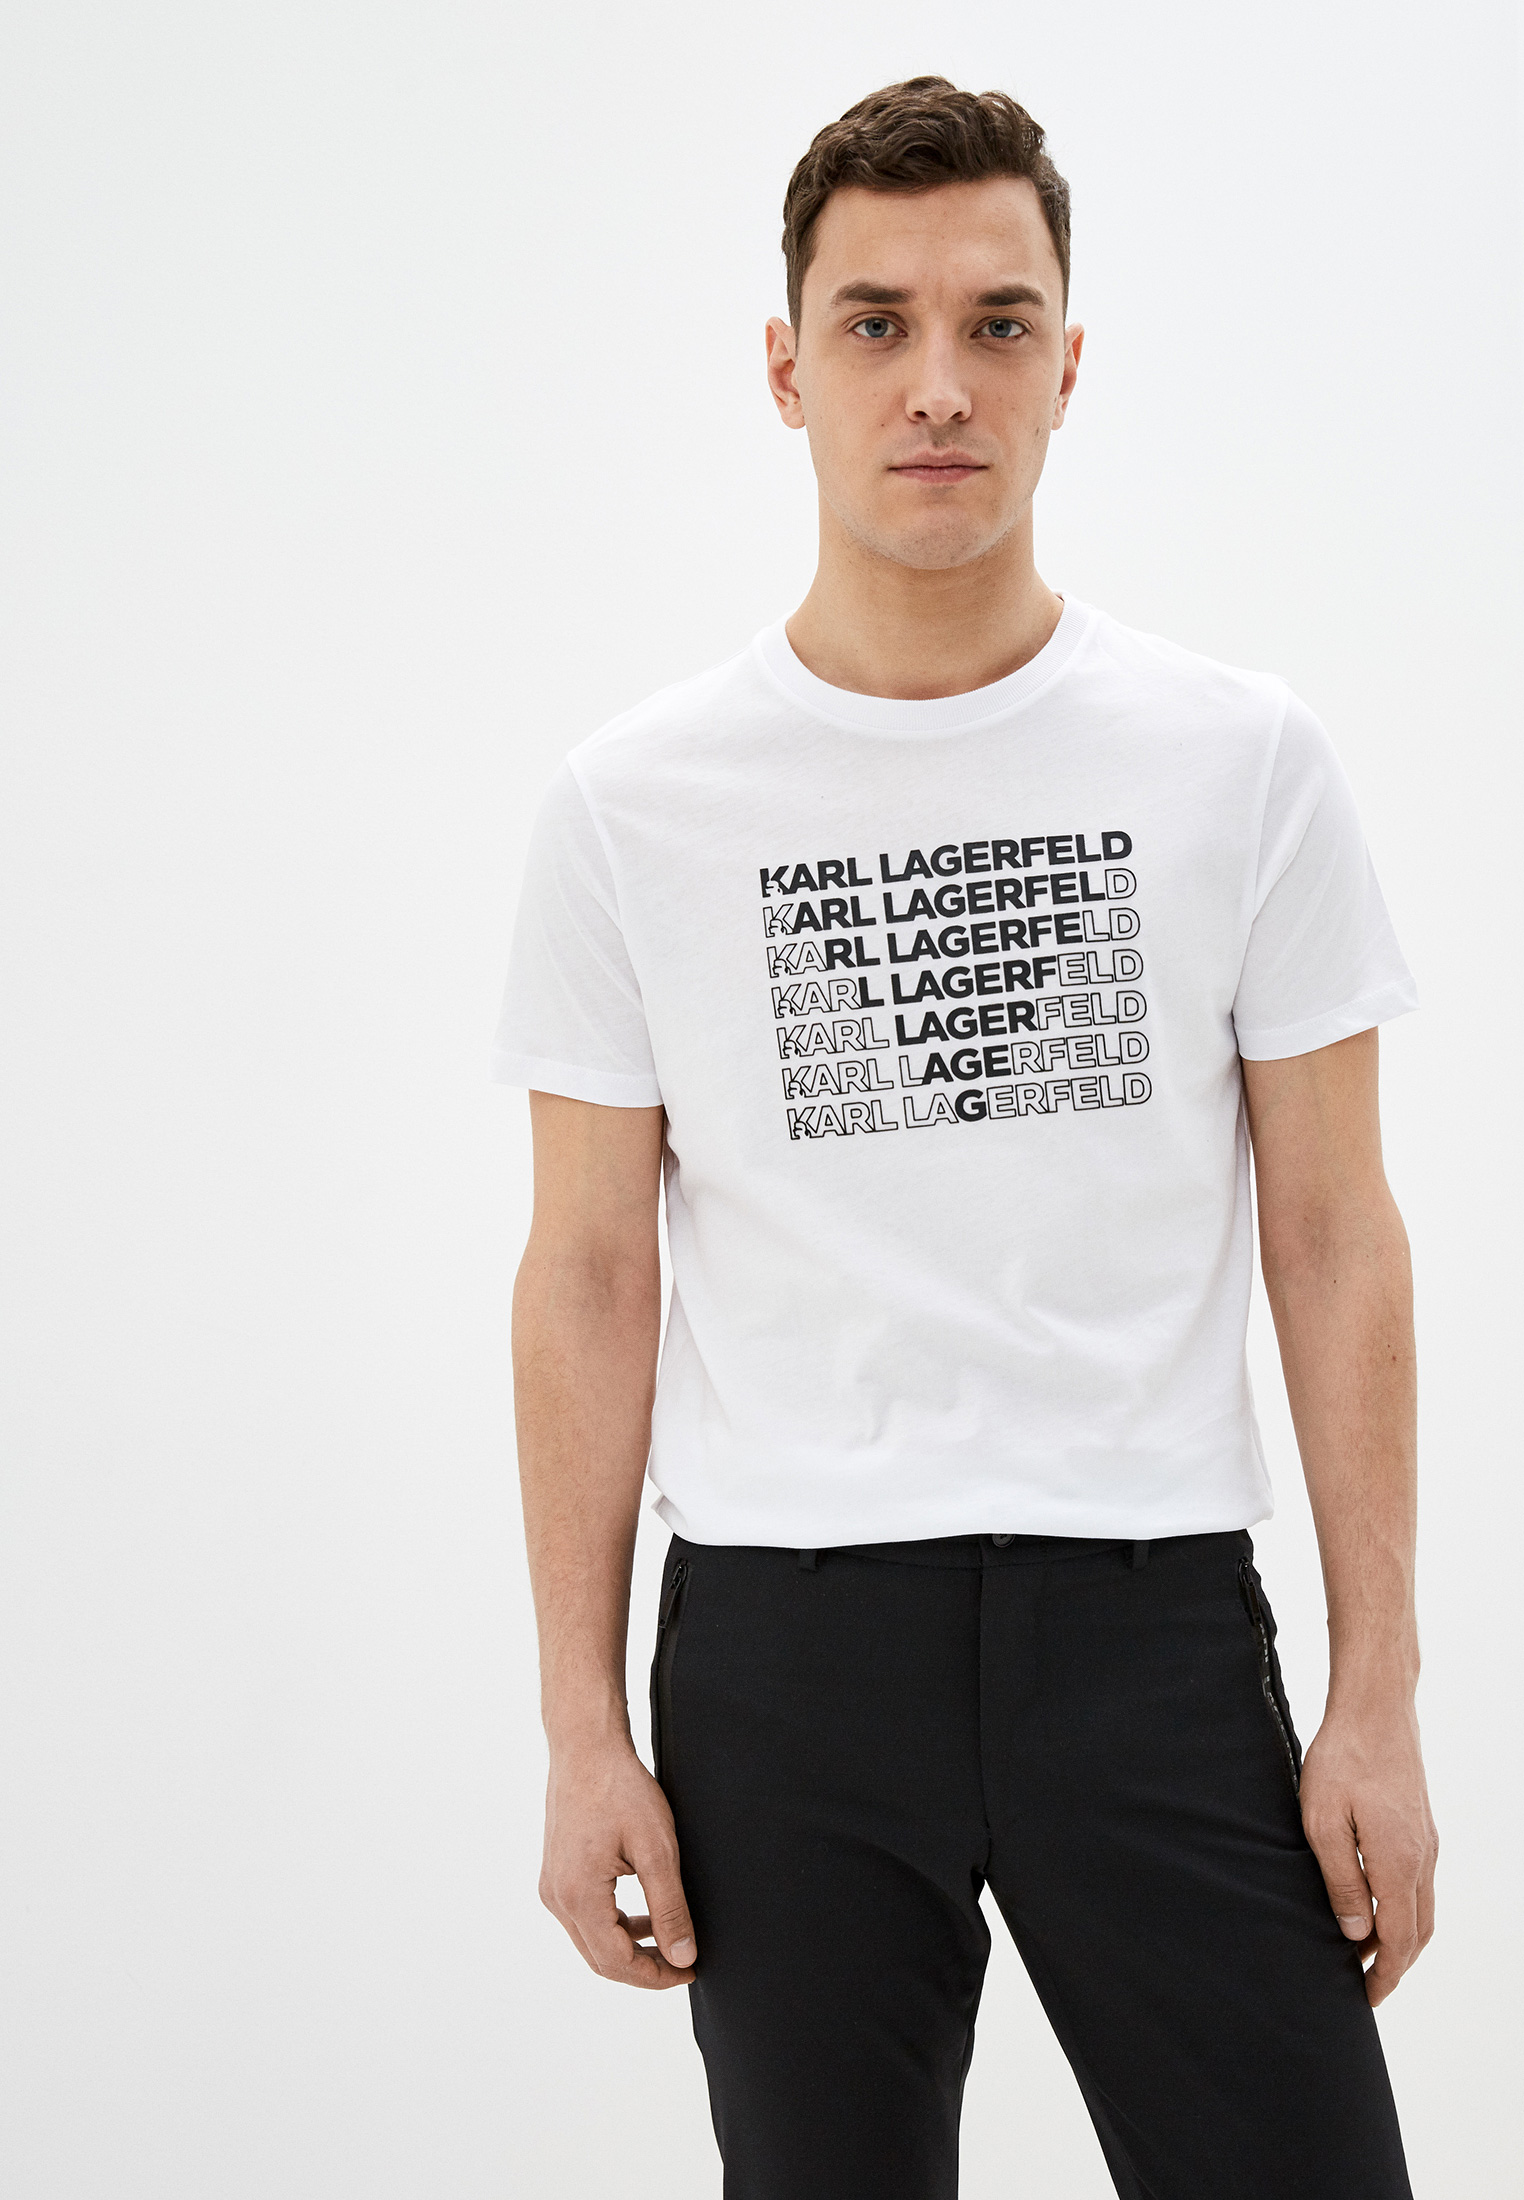 Футболки лагерфельд купить. Karl Lagerfeld футболка мужская белая.